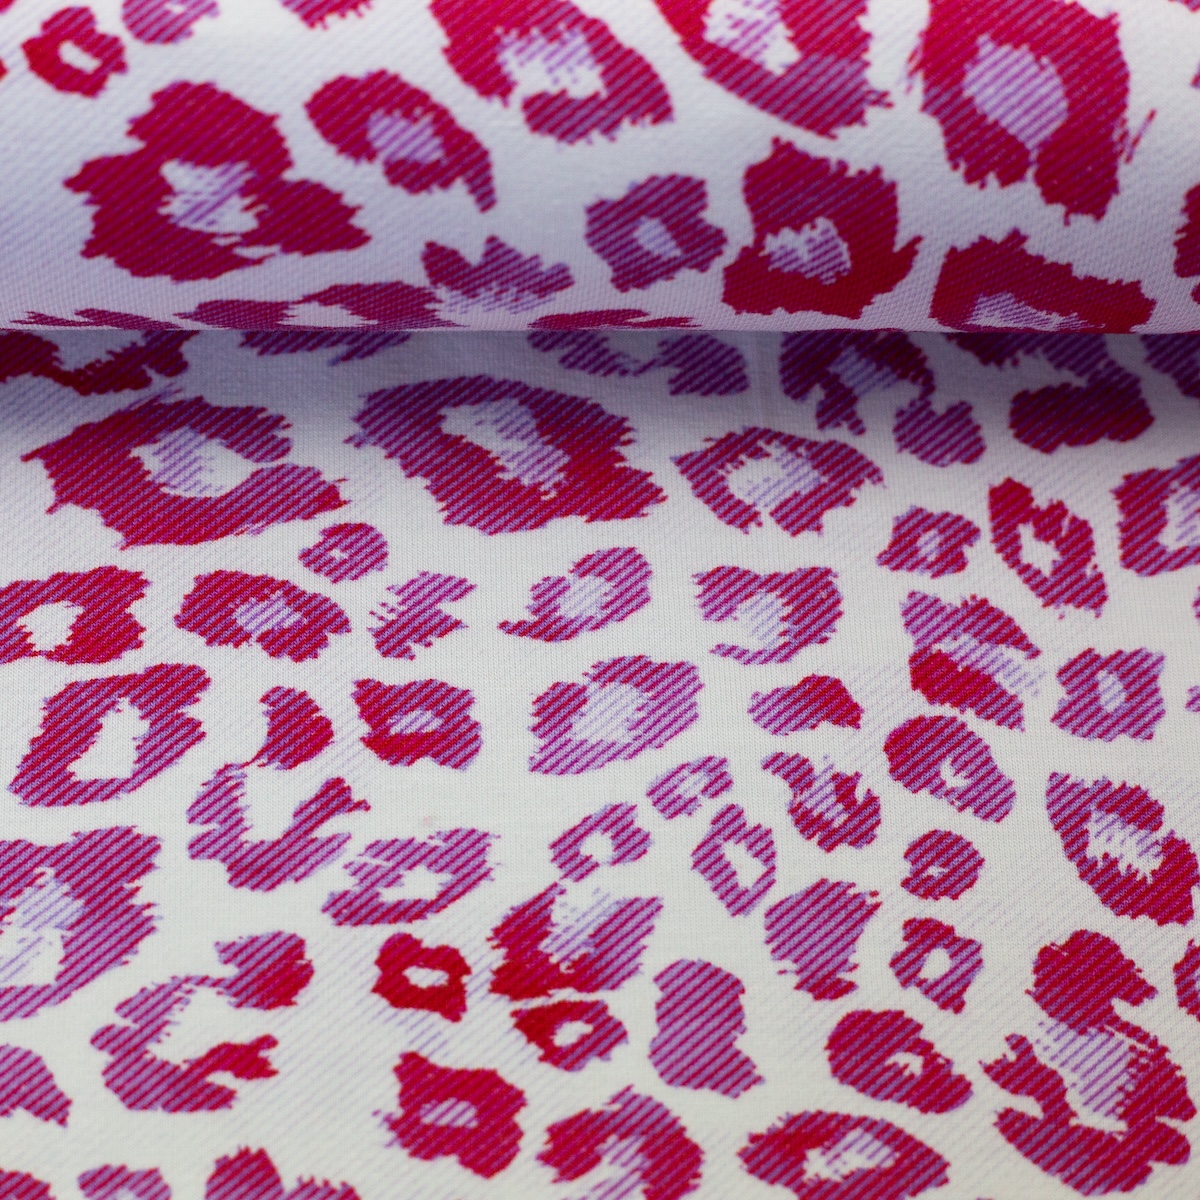 Baumwolljersey Madrid - Leoparden Muster pink/weiß Jeans - Meterware (0,50m)